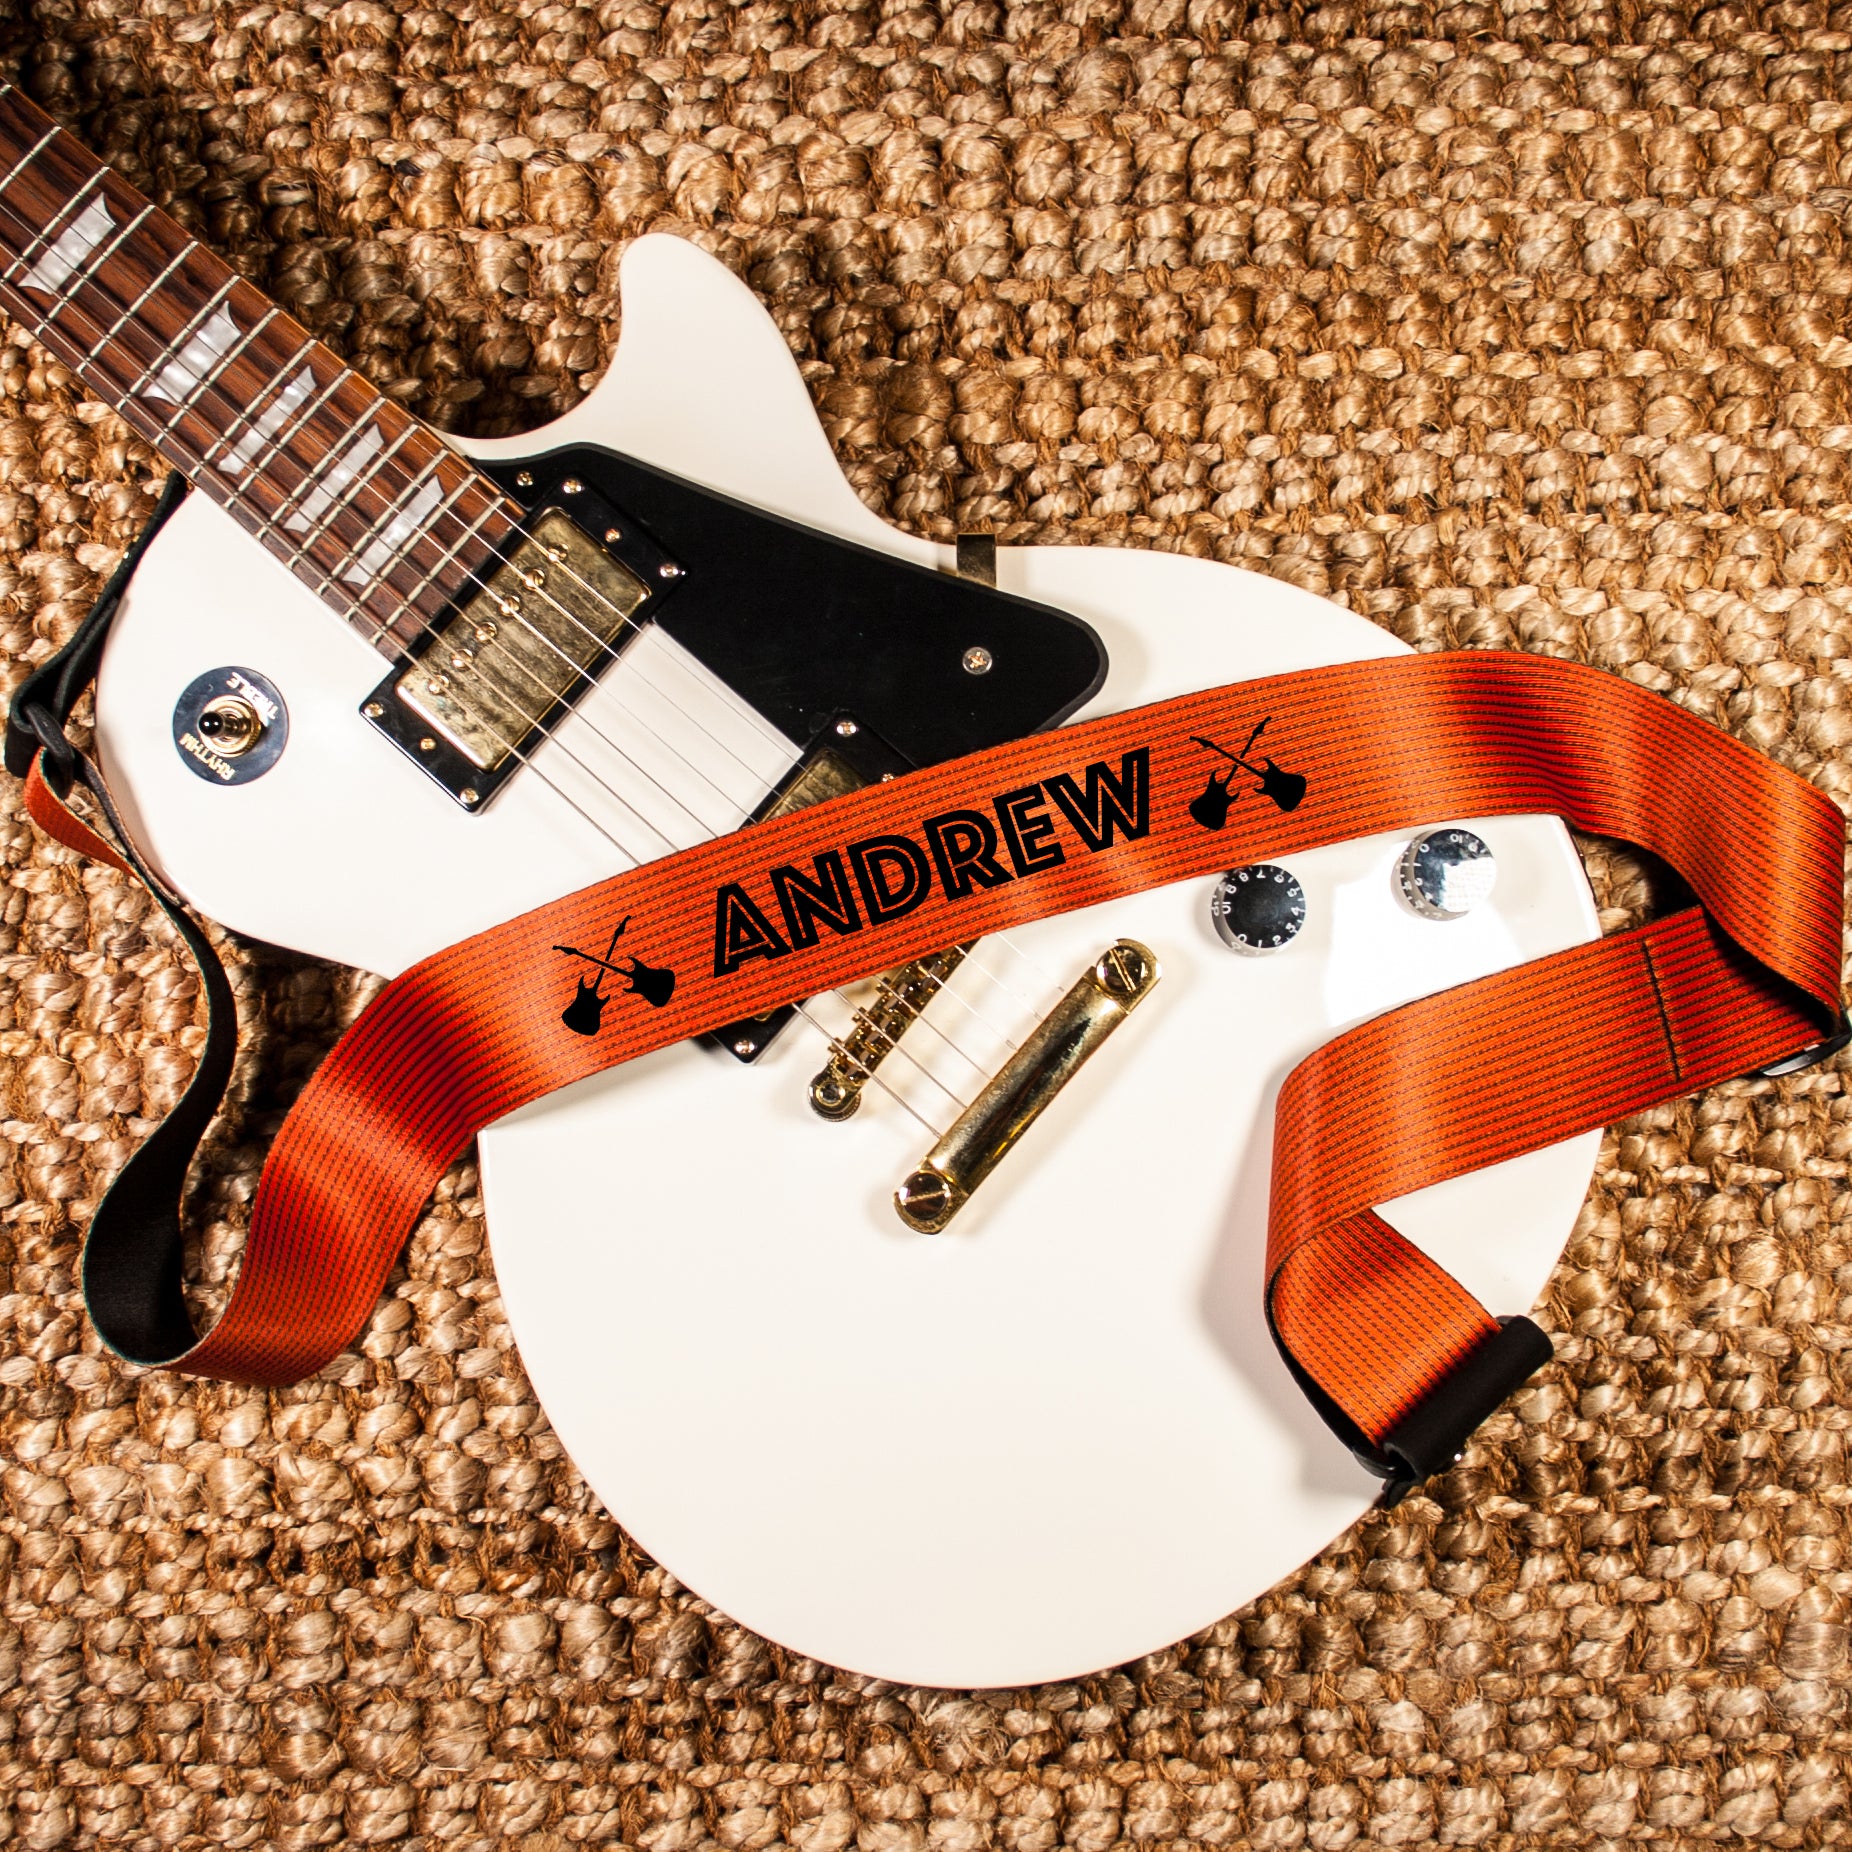 Orange polyester guitar strap on a white guitar. 